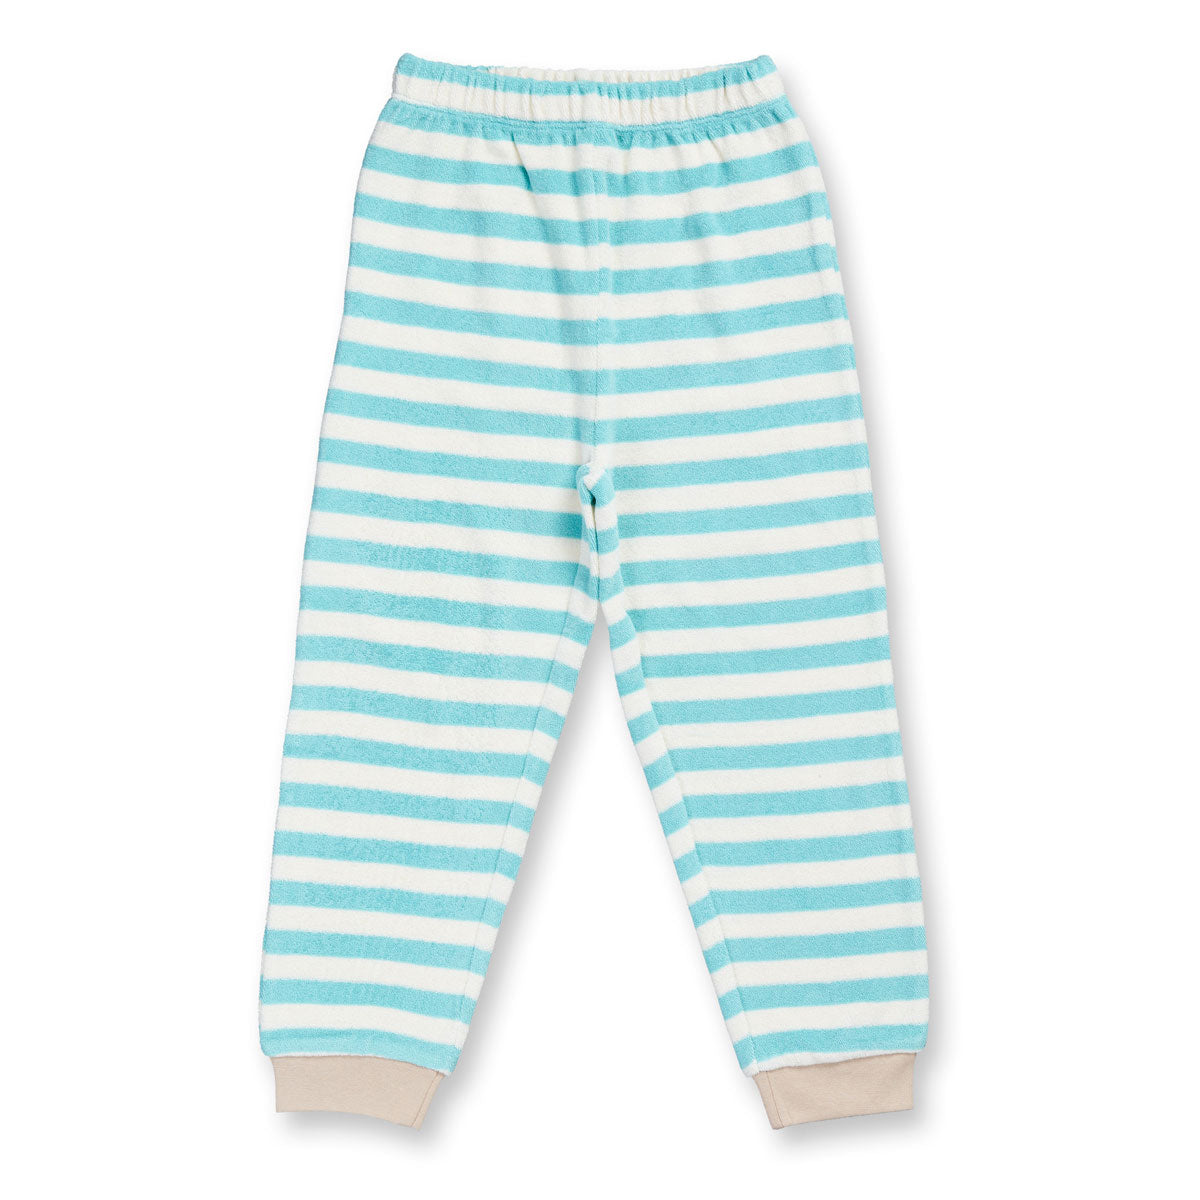 Sense Organics Frottee Kinder Pyjama Schlafanzug Bio Baumwolle